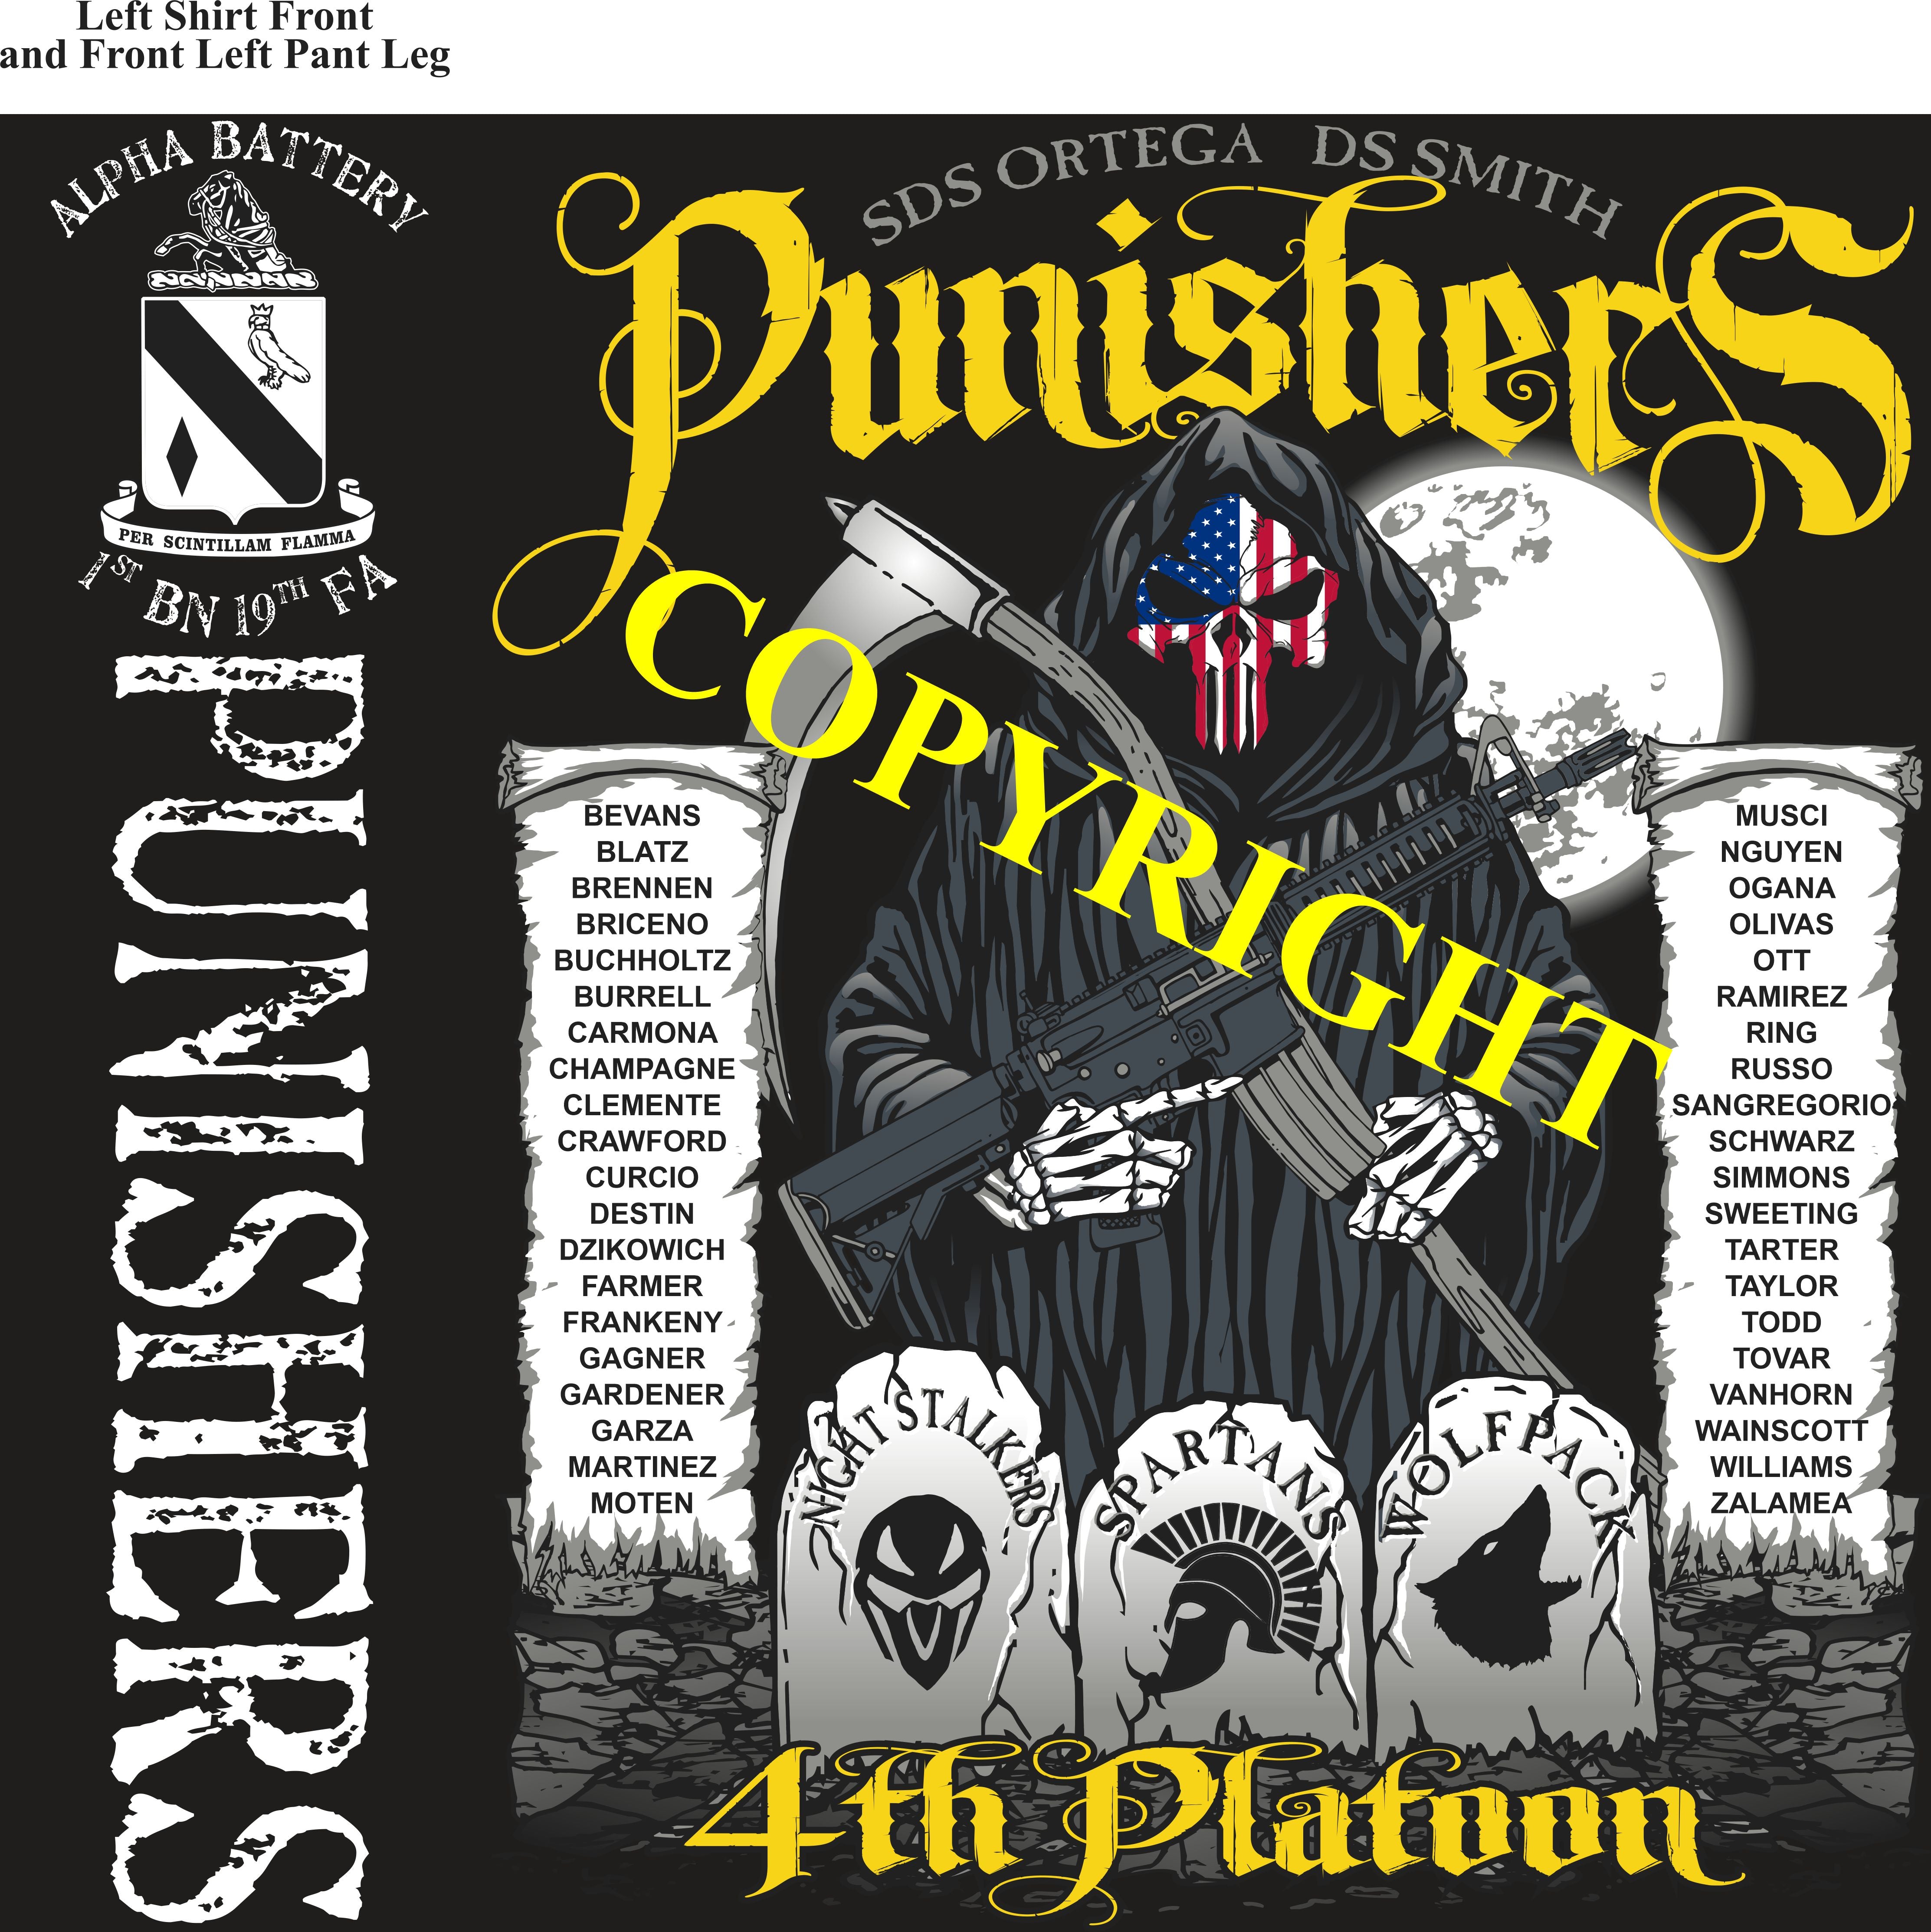 Platoon Shirts (2nd generation print) ALPHA 1st 19th PUNISHERS MAY 2021